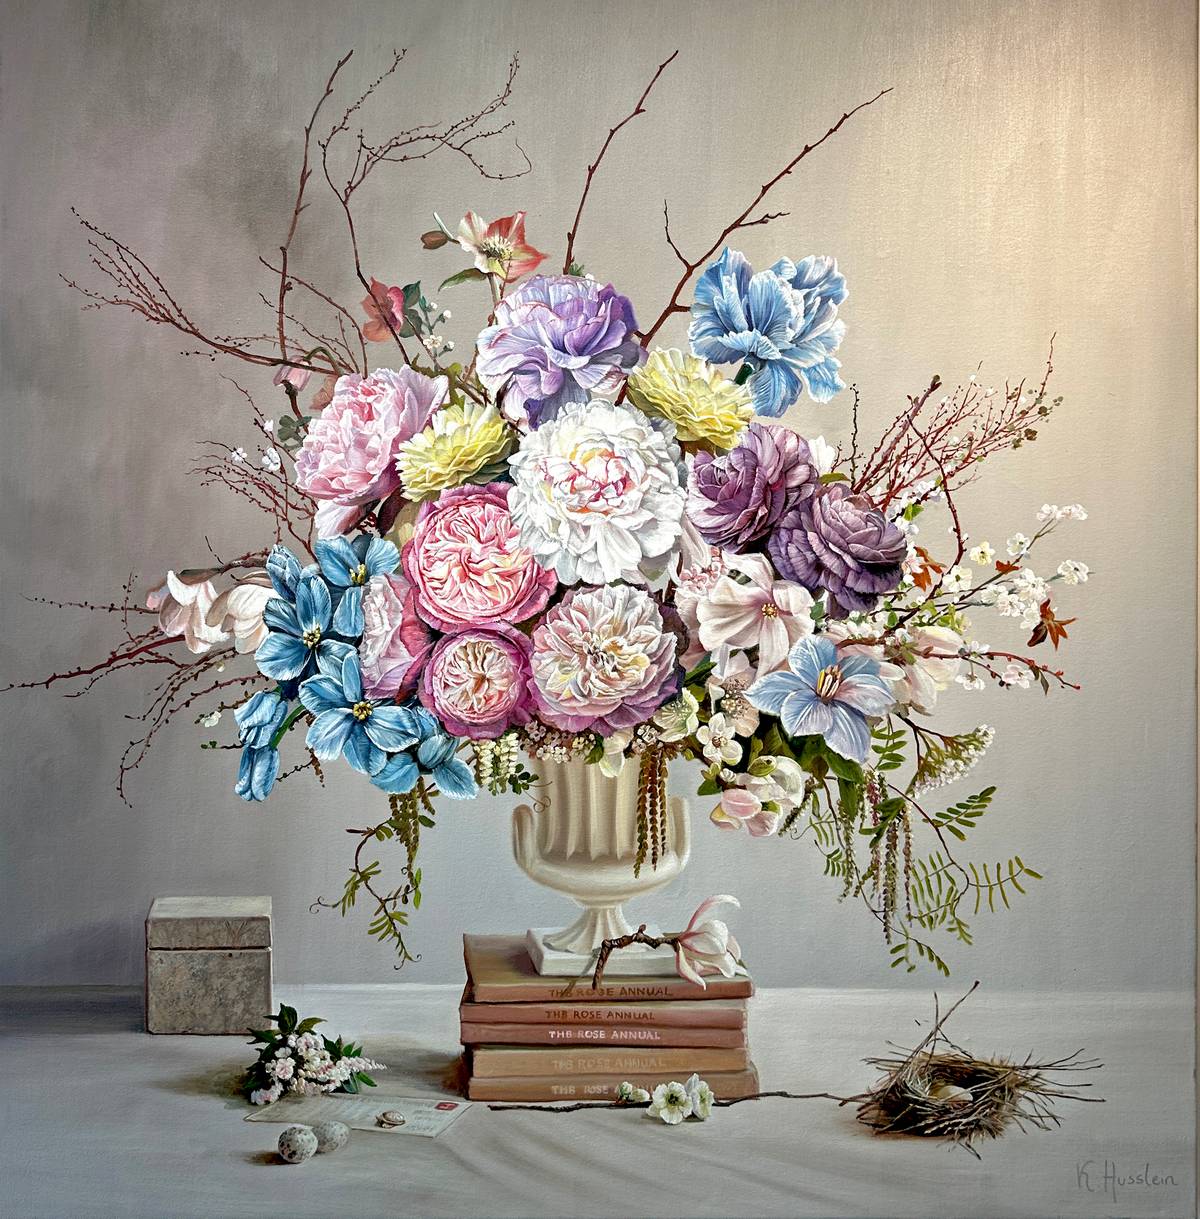 NewingerART: The Rose Annual (Katharina Husslein, 2023) 110 x 110 cm